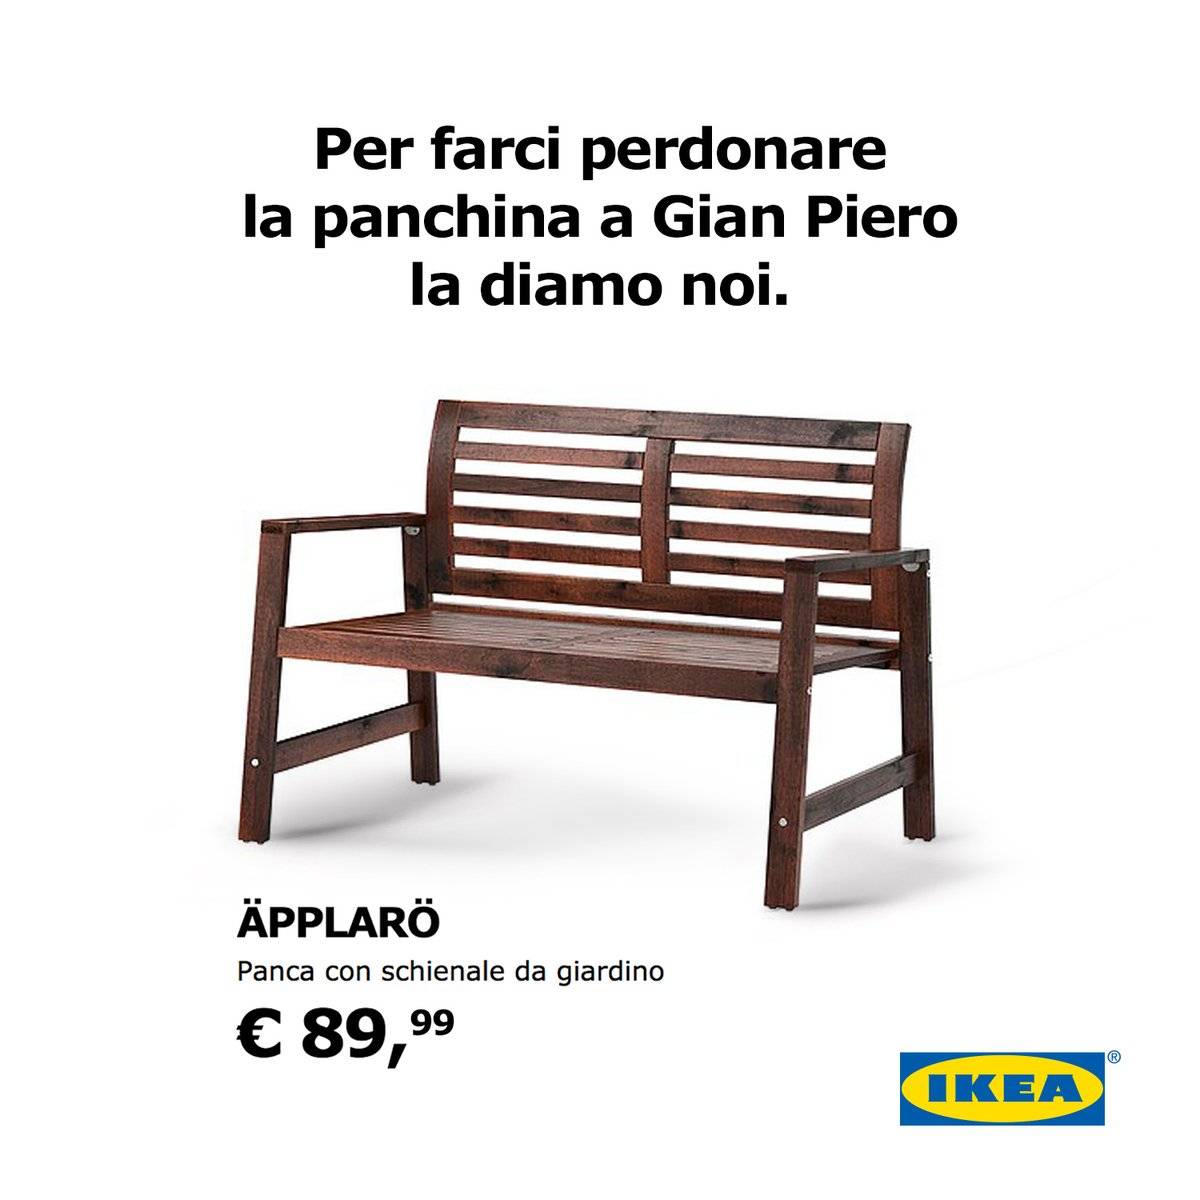 Ikea ironizza sull'Italia: "Ventura, la panchina te la diamo noi"